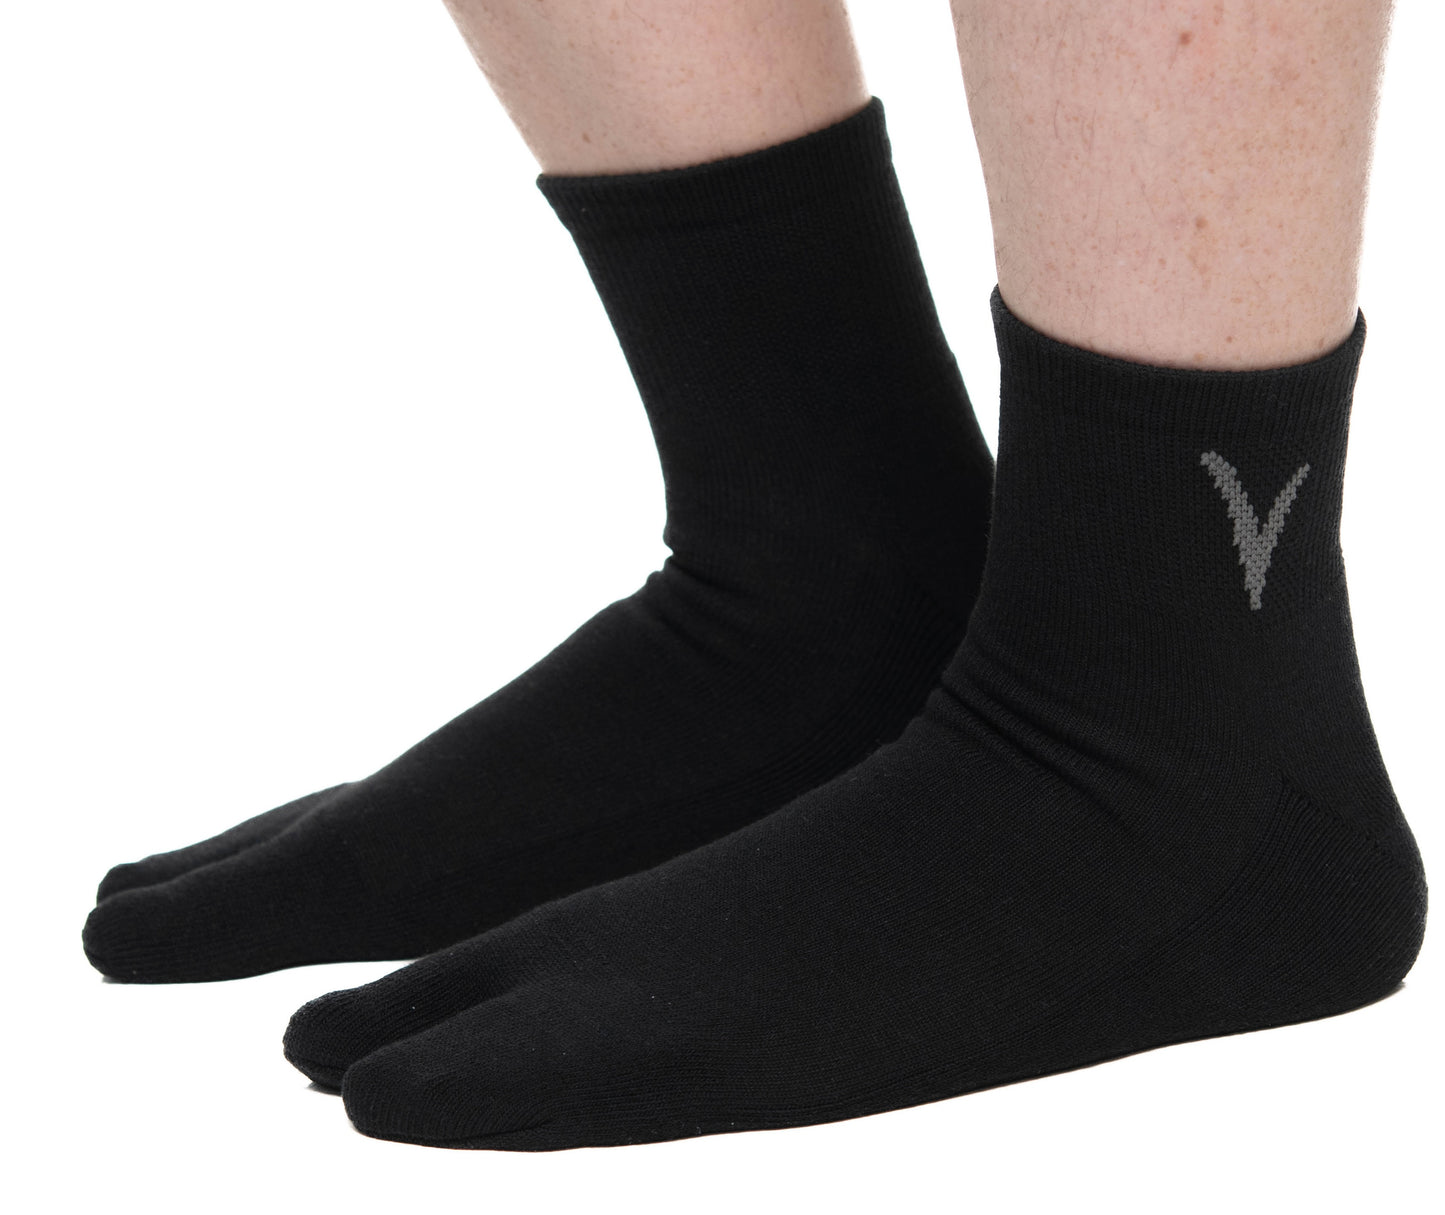 Mini-Crew - V-Toe Thicker Flip-Flop Tabi Socks Athletic or Casual Black Cotton Blend Comfortable Stylish